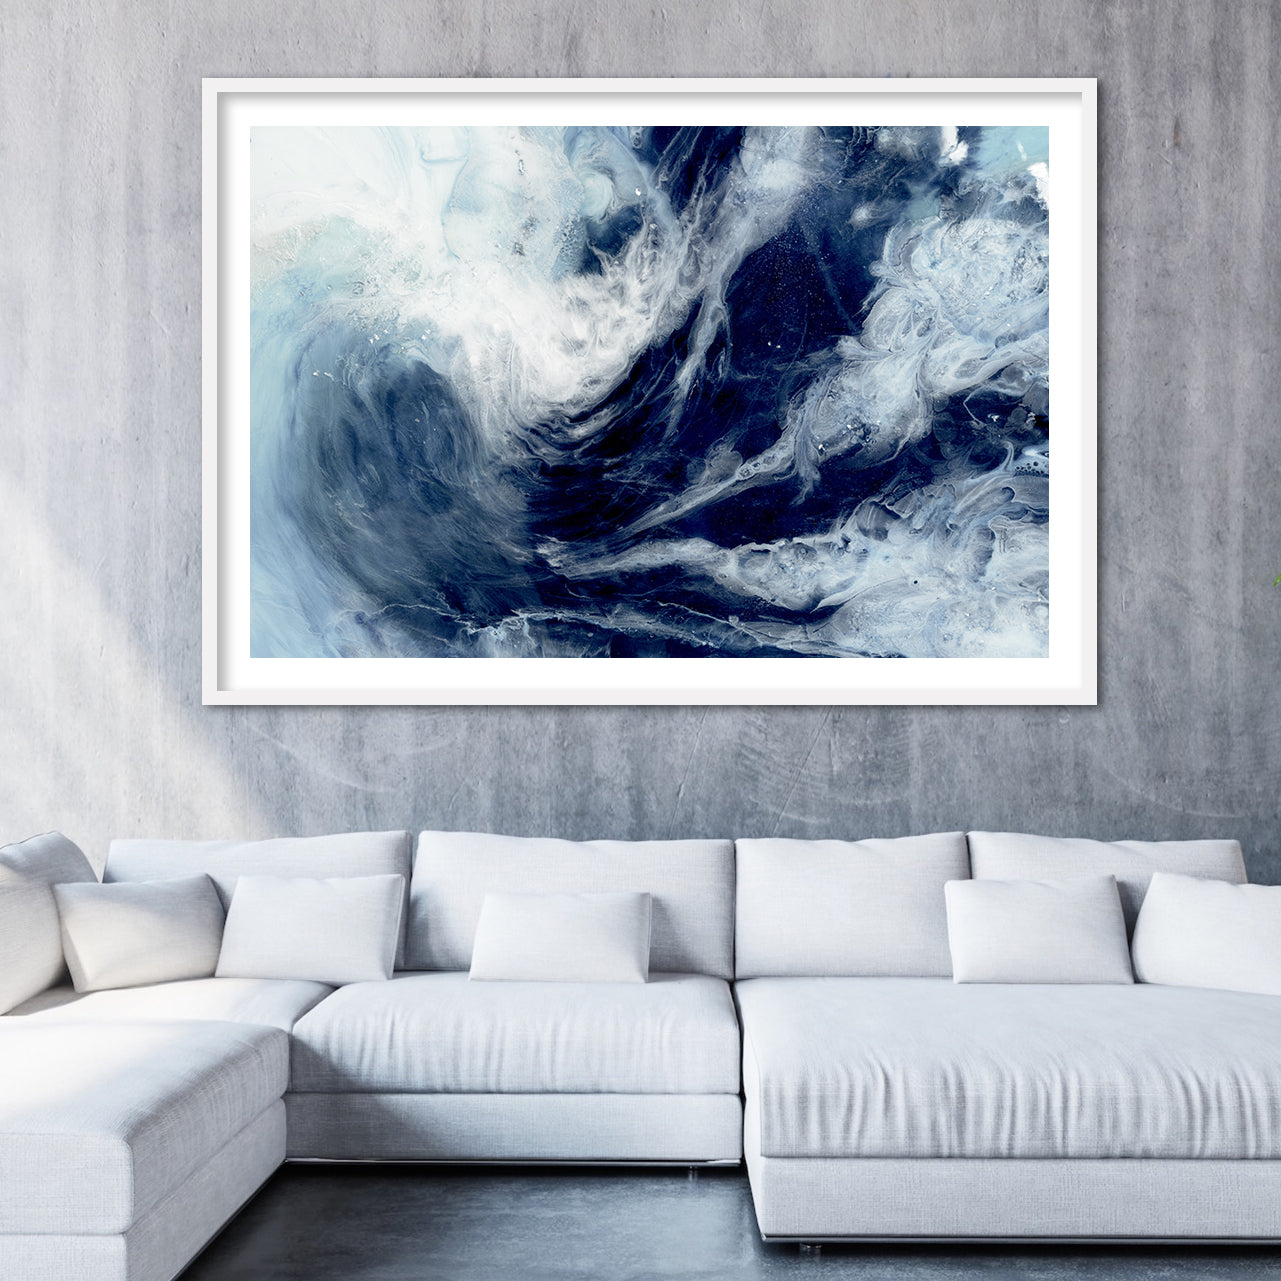 Abstract Sea. Black and White. Boro 5 Tornado. Art Print. Antuanelle 6 Boracay Dreams Limited Edition Print